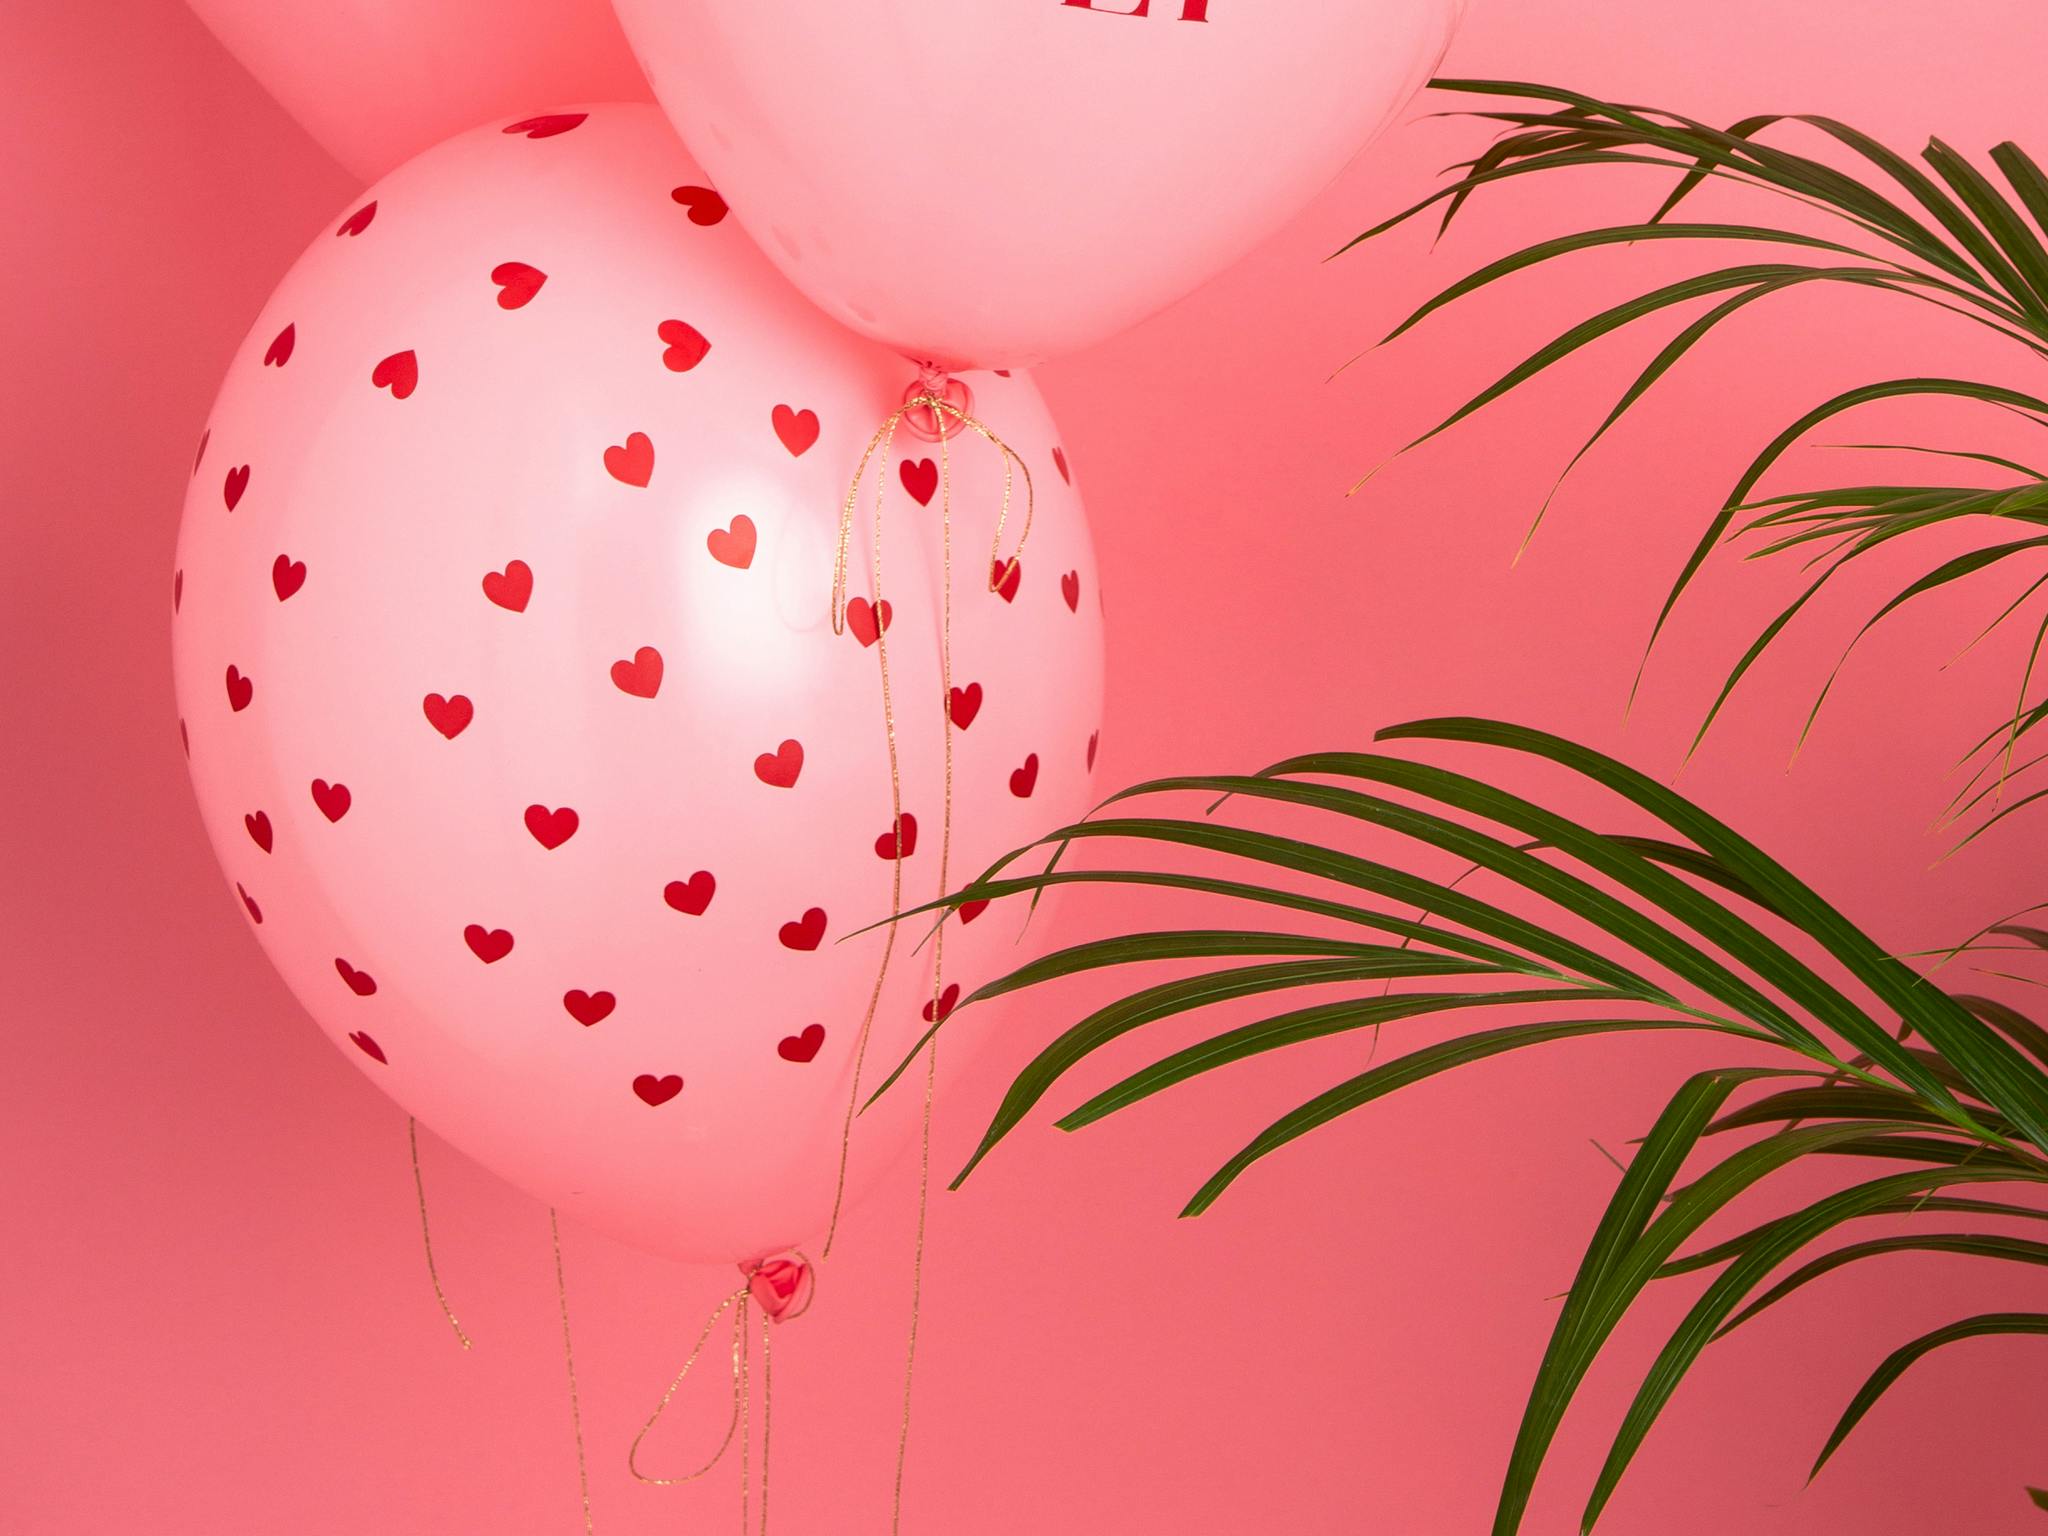 Rosa & röd ballong - Alla hjärtans dag ballong